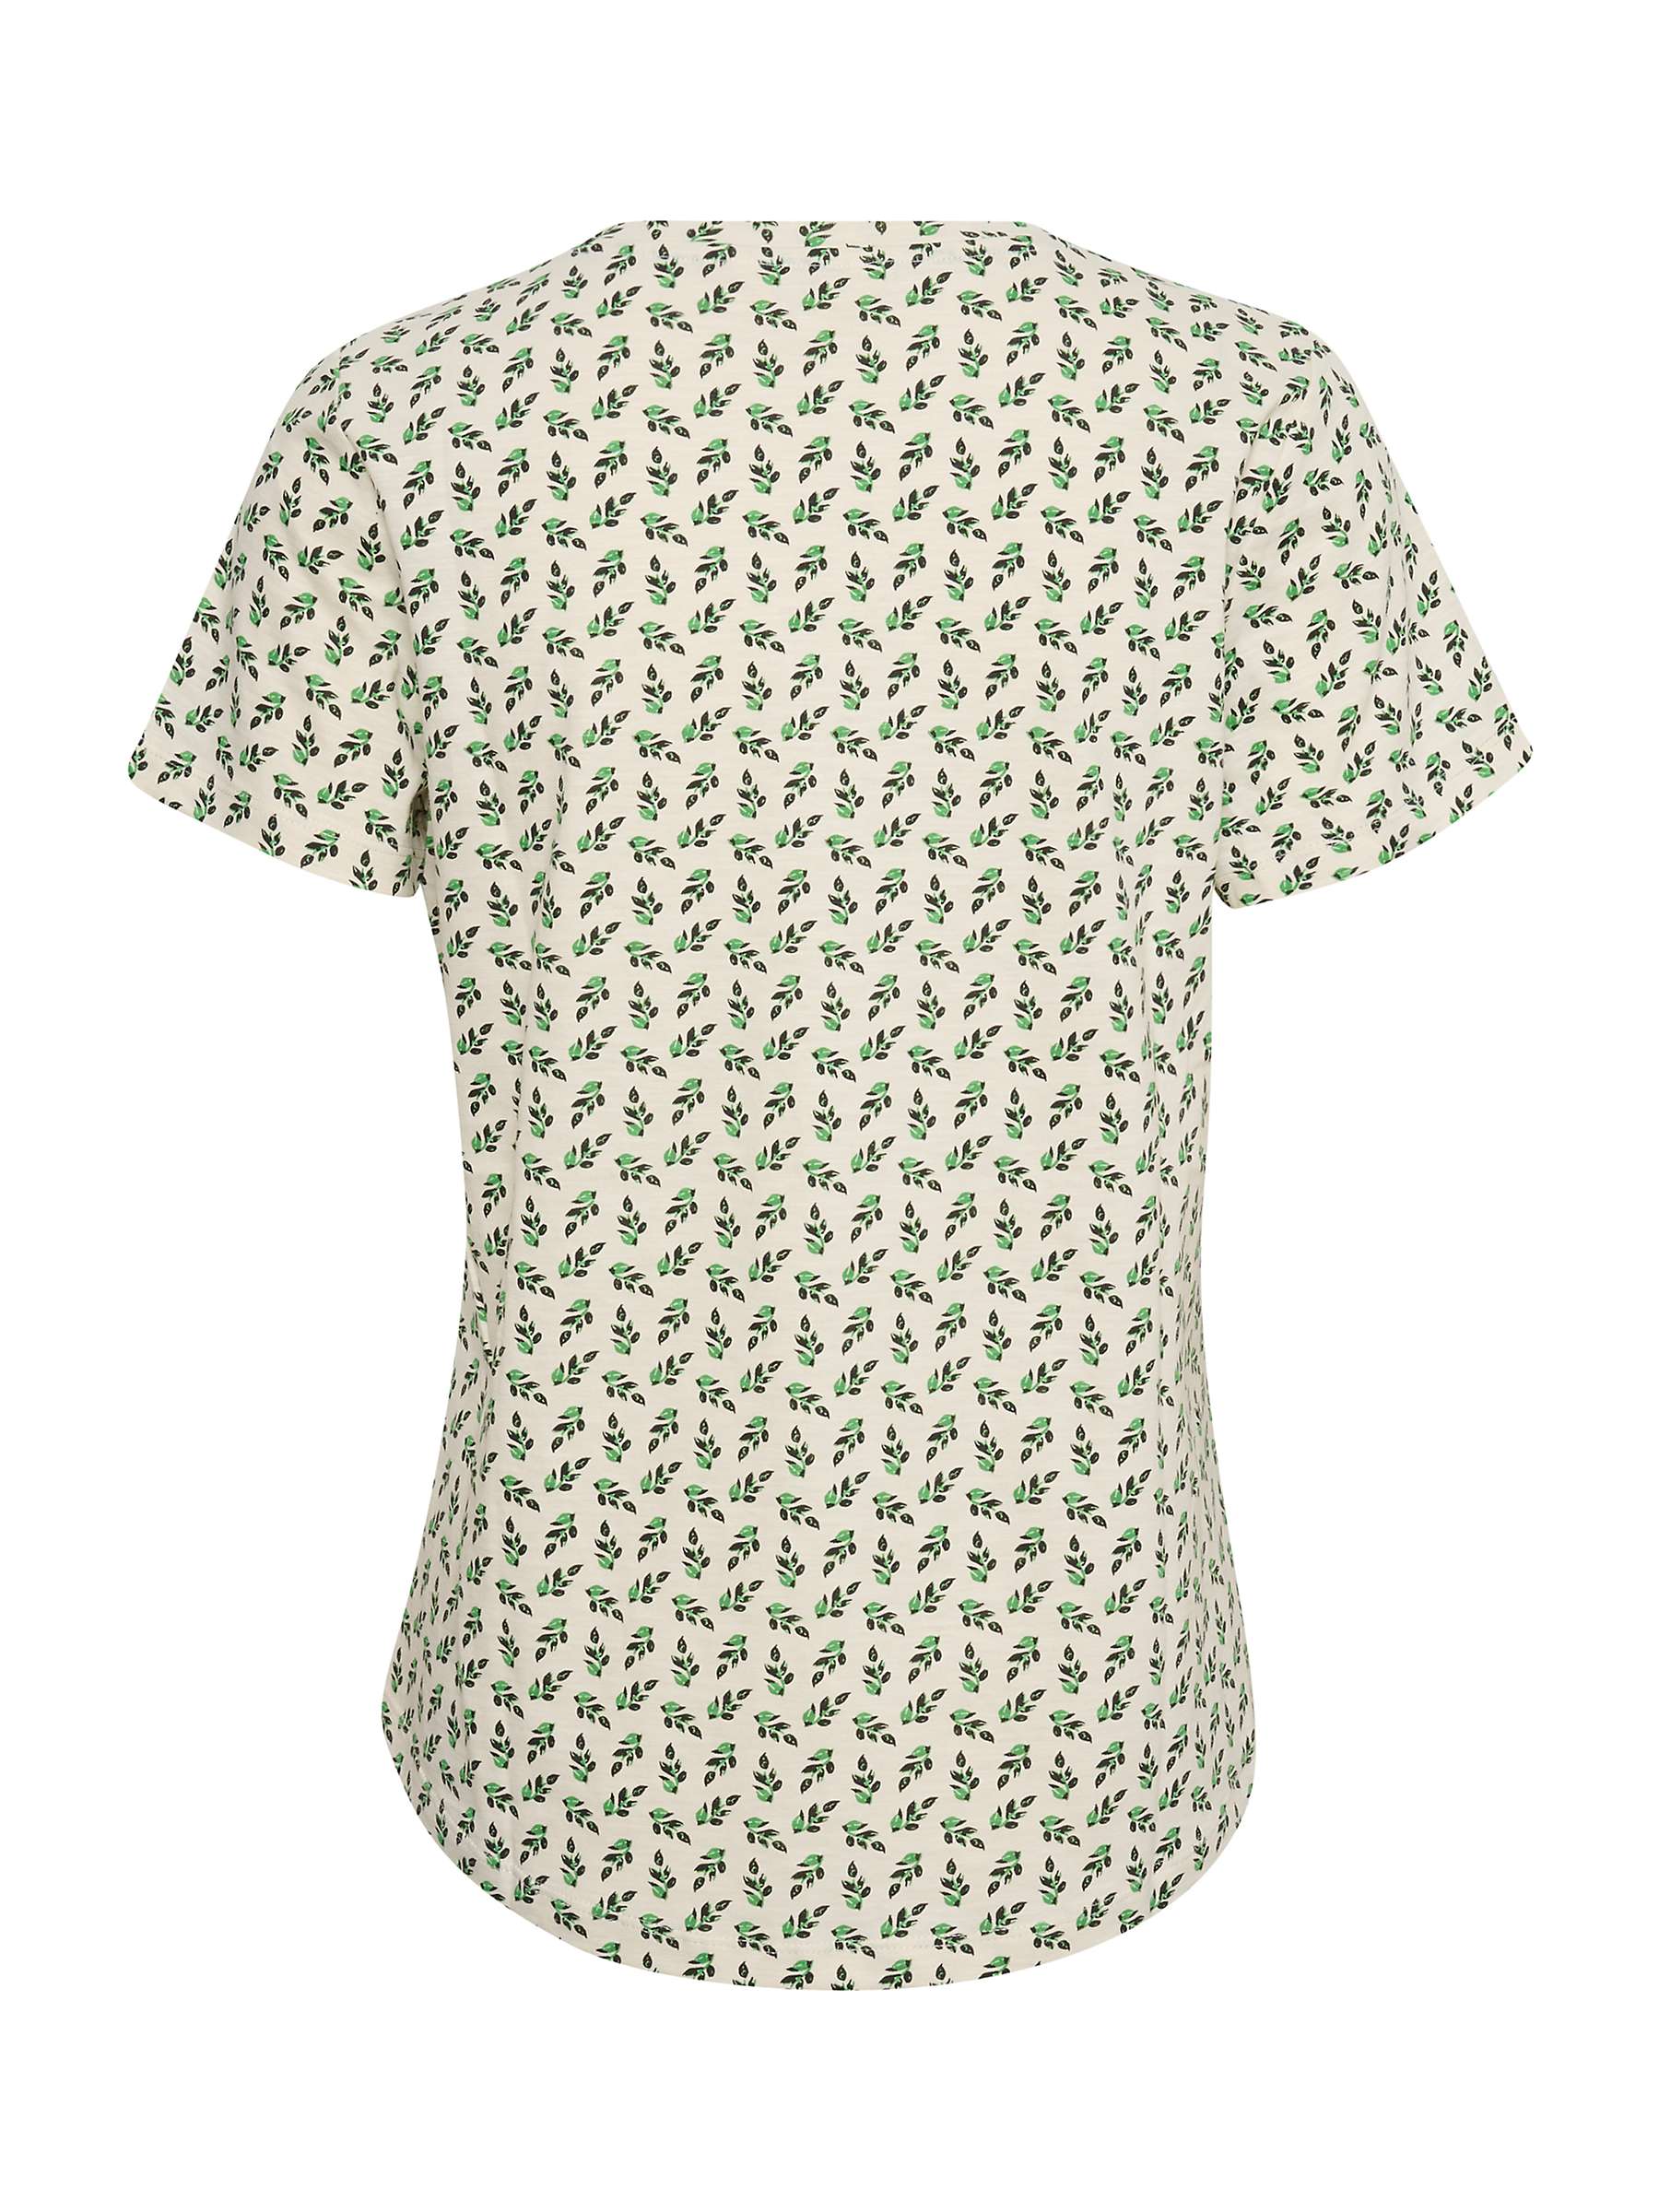 Buy Part Two Gesina Short Sleeve Cotton Top, Greenbriar Leaf Online at johnlewis.com